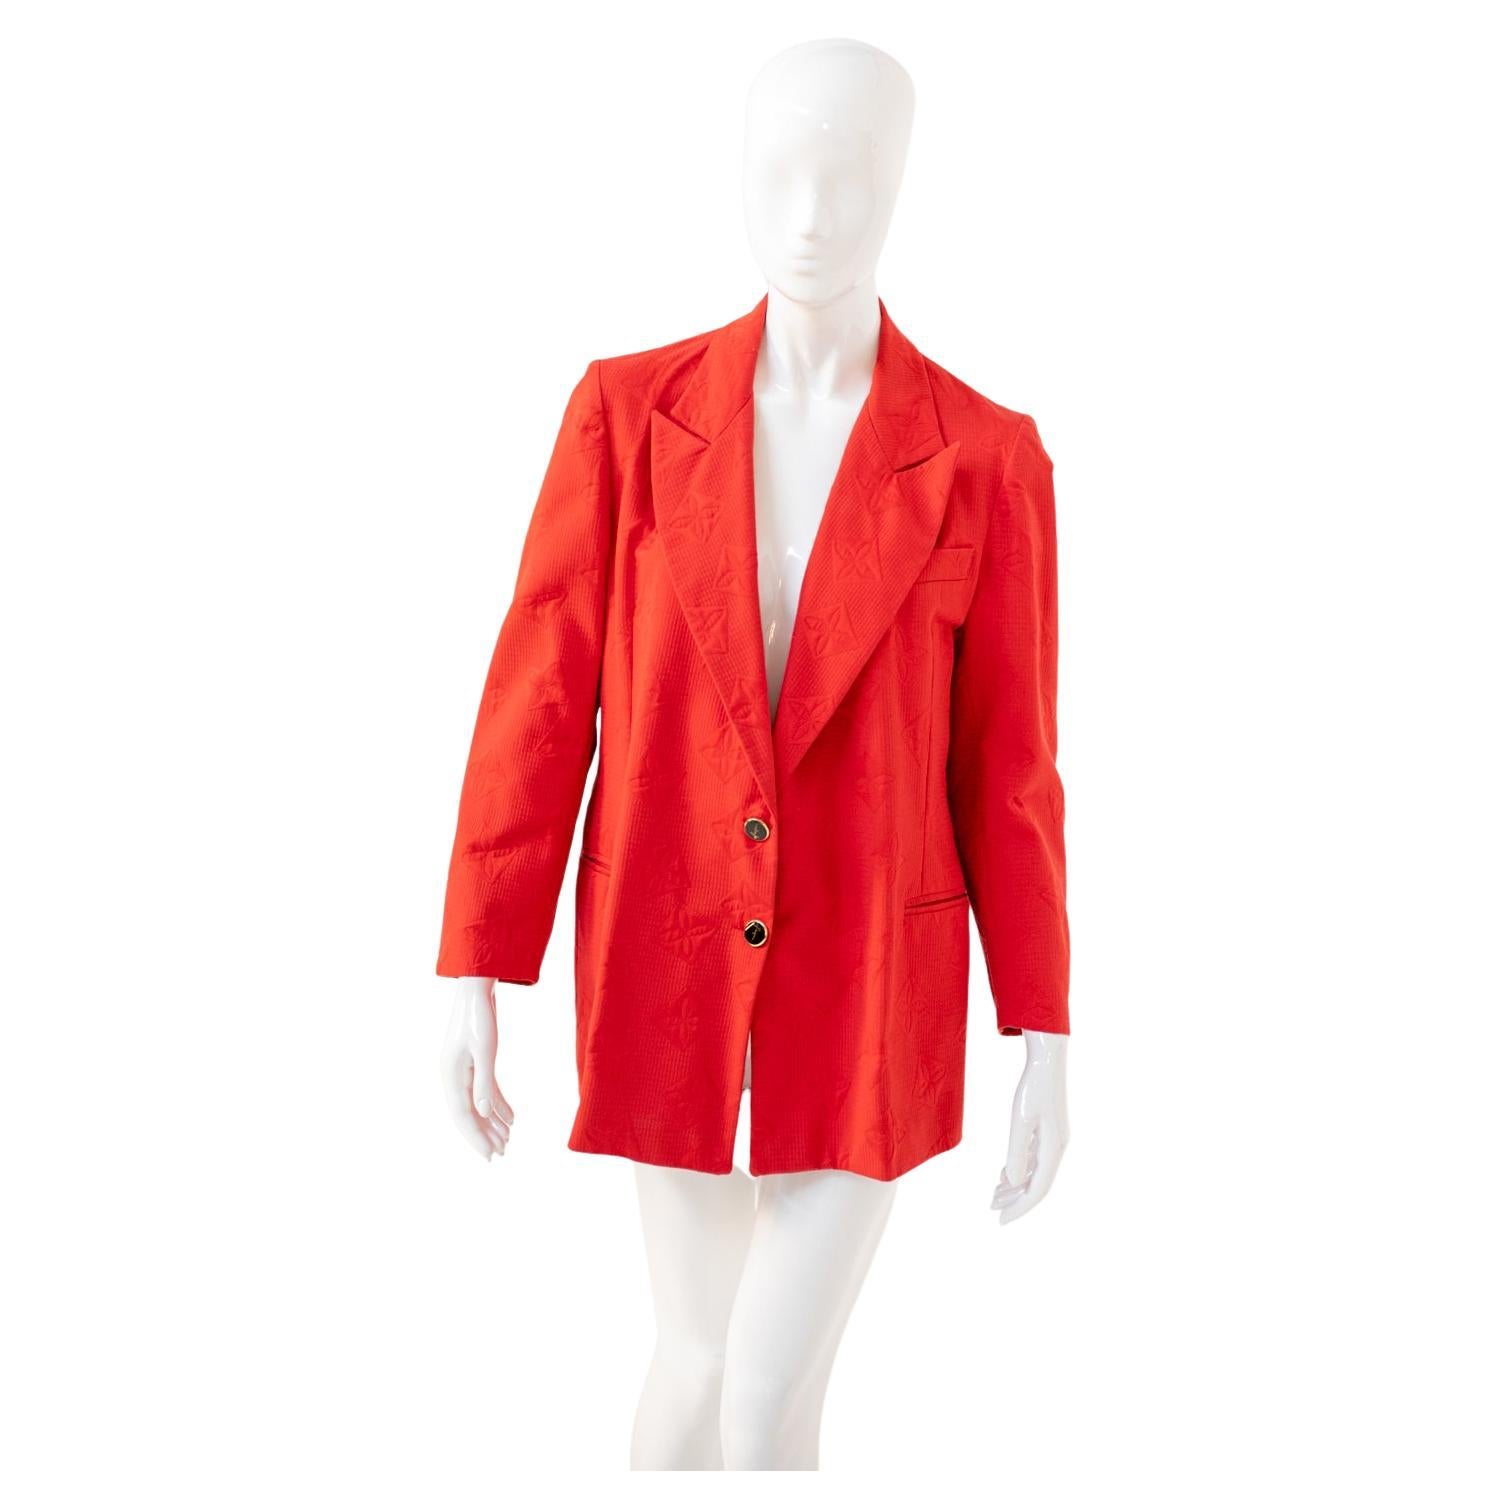 Chic Vintage Sparkly Red Blazer For Sale